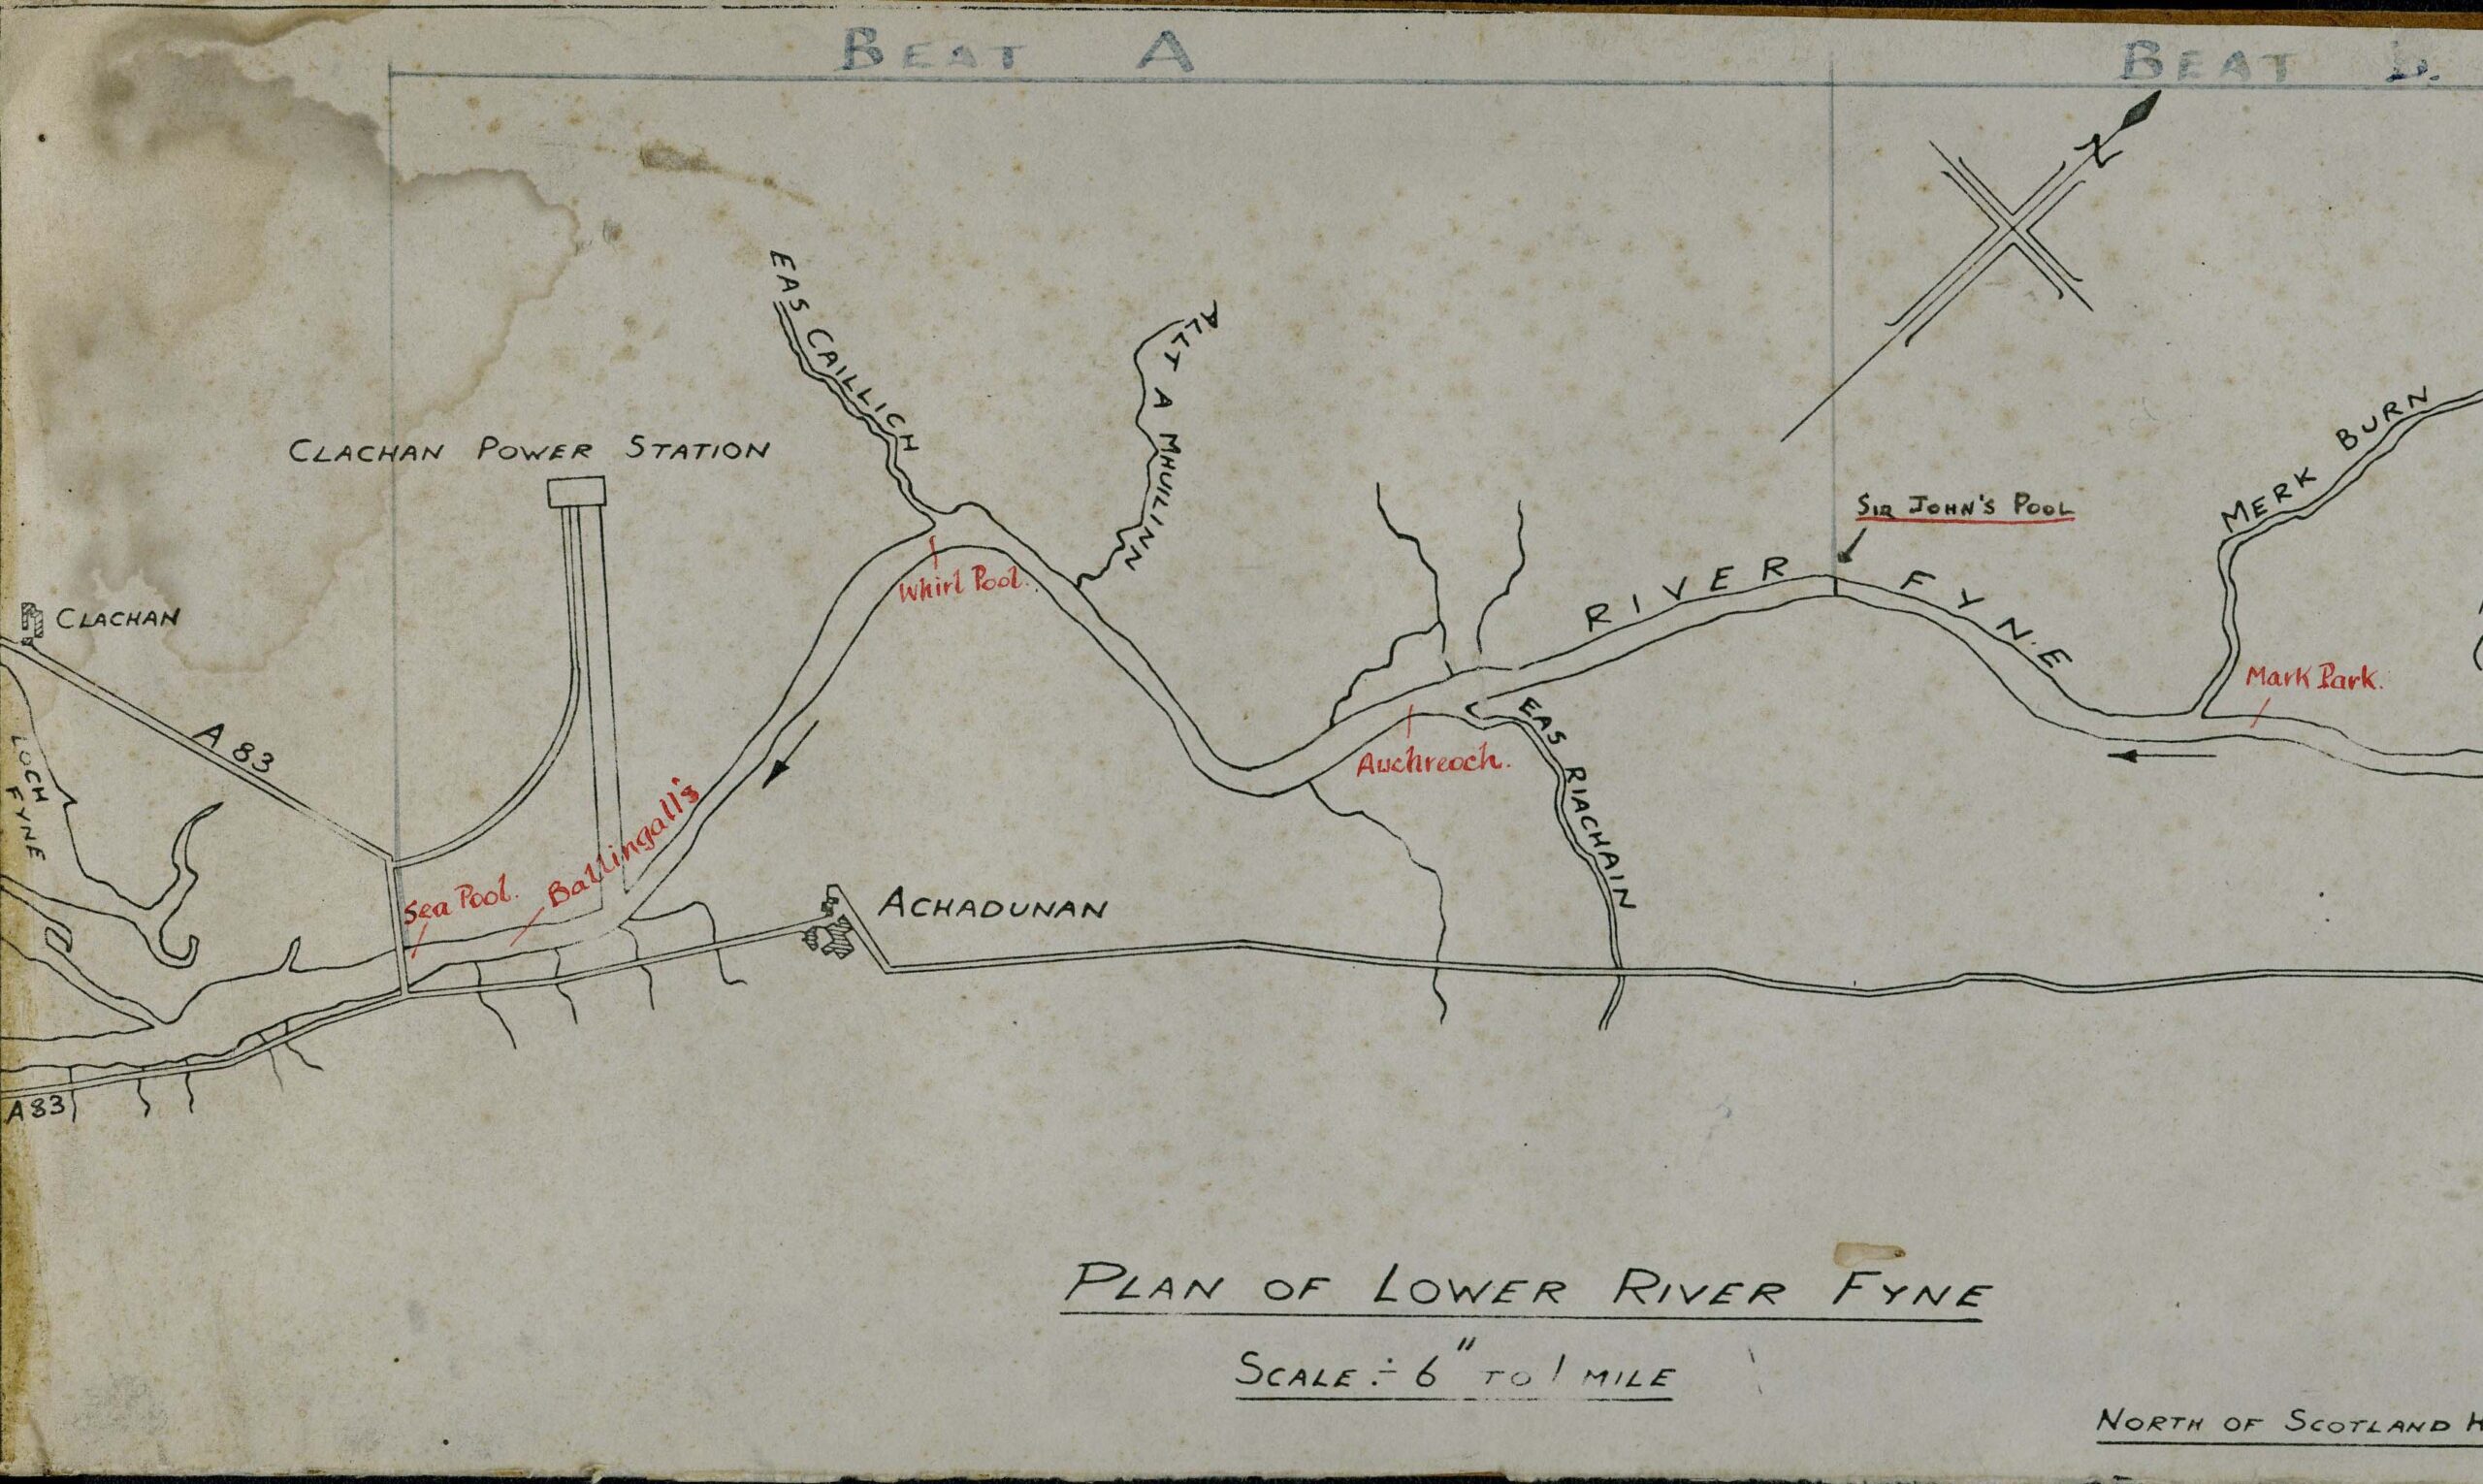 Map of River Fyne